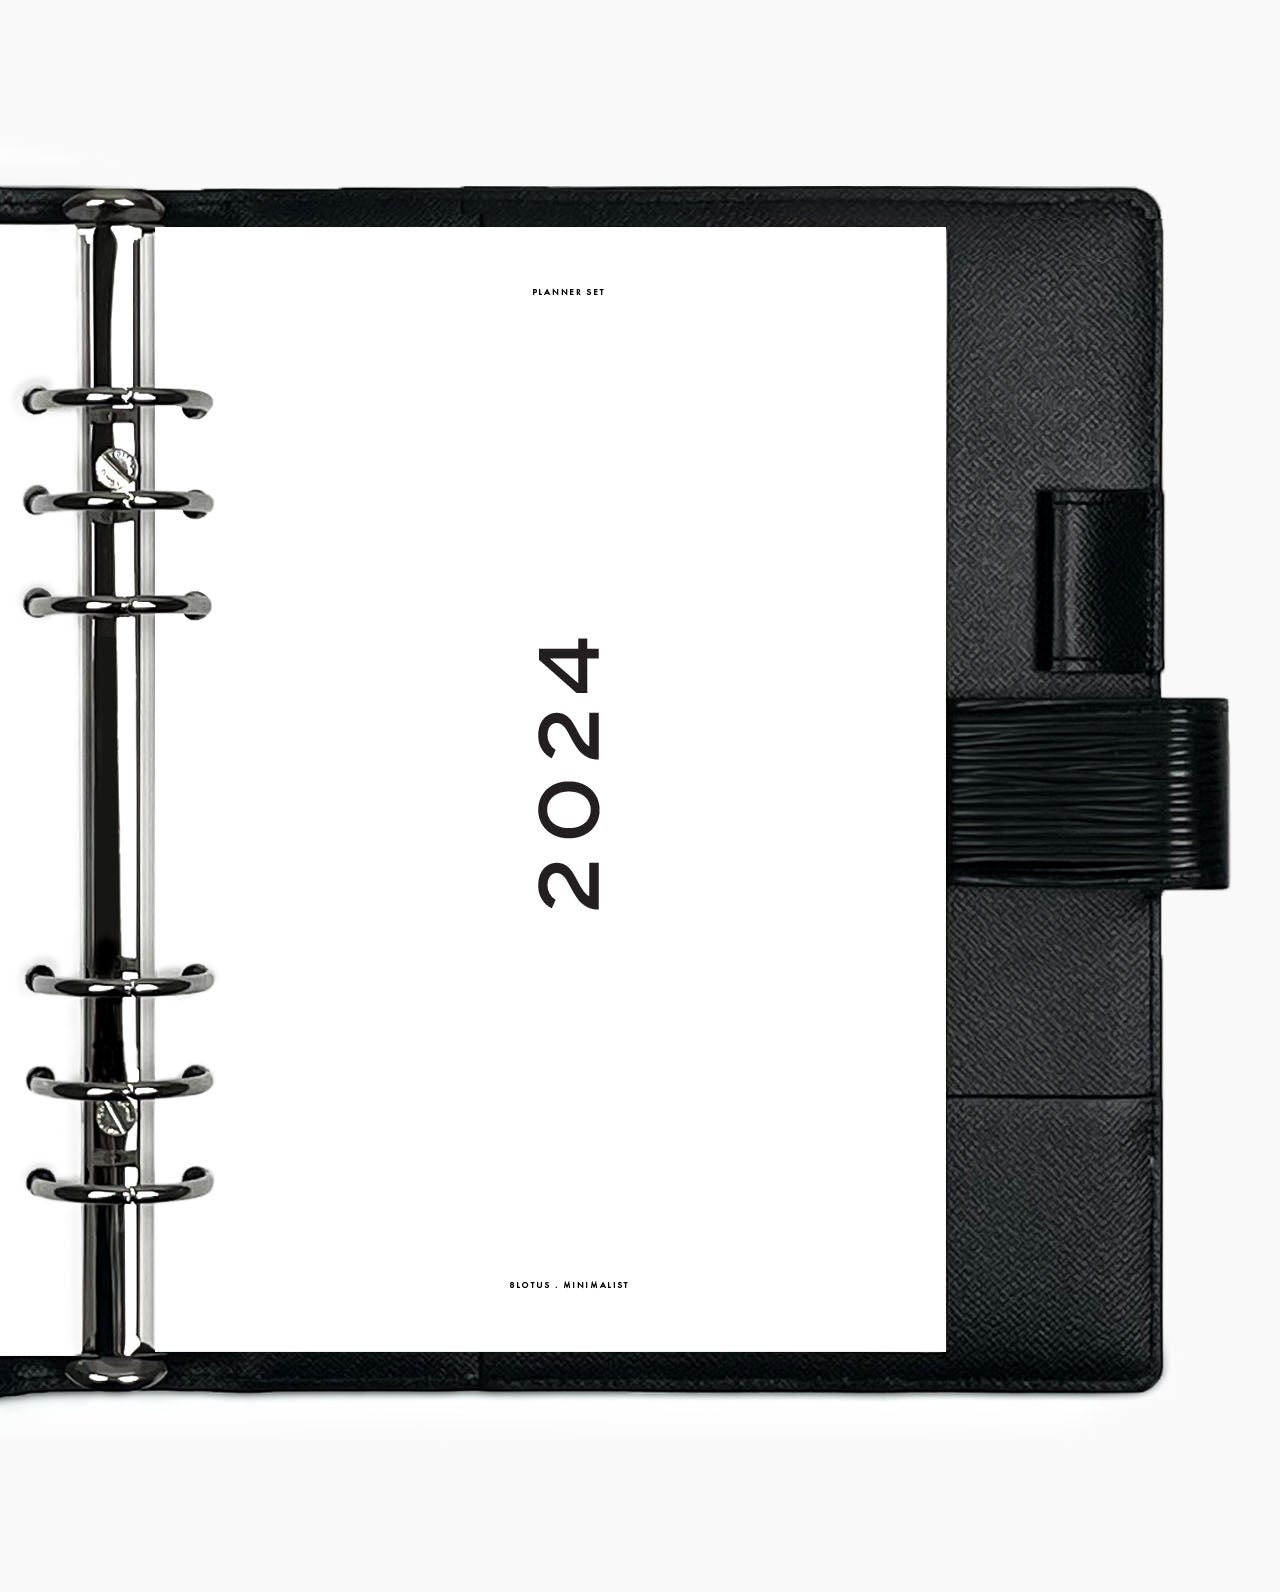 2023 or 2024 FITS Louis Vuitton PM Agenda Monthly Insert Calendar + Paper+  Pen